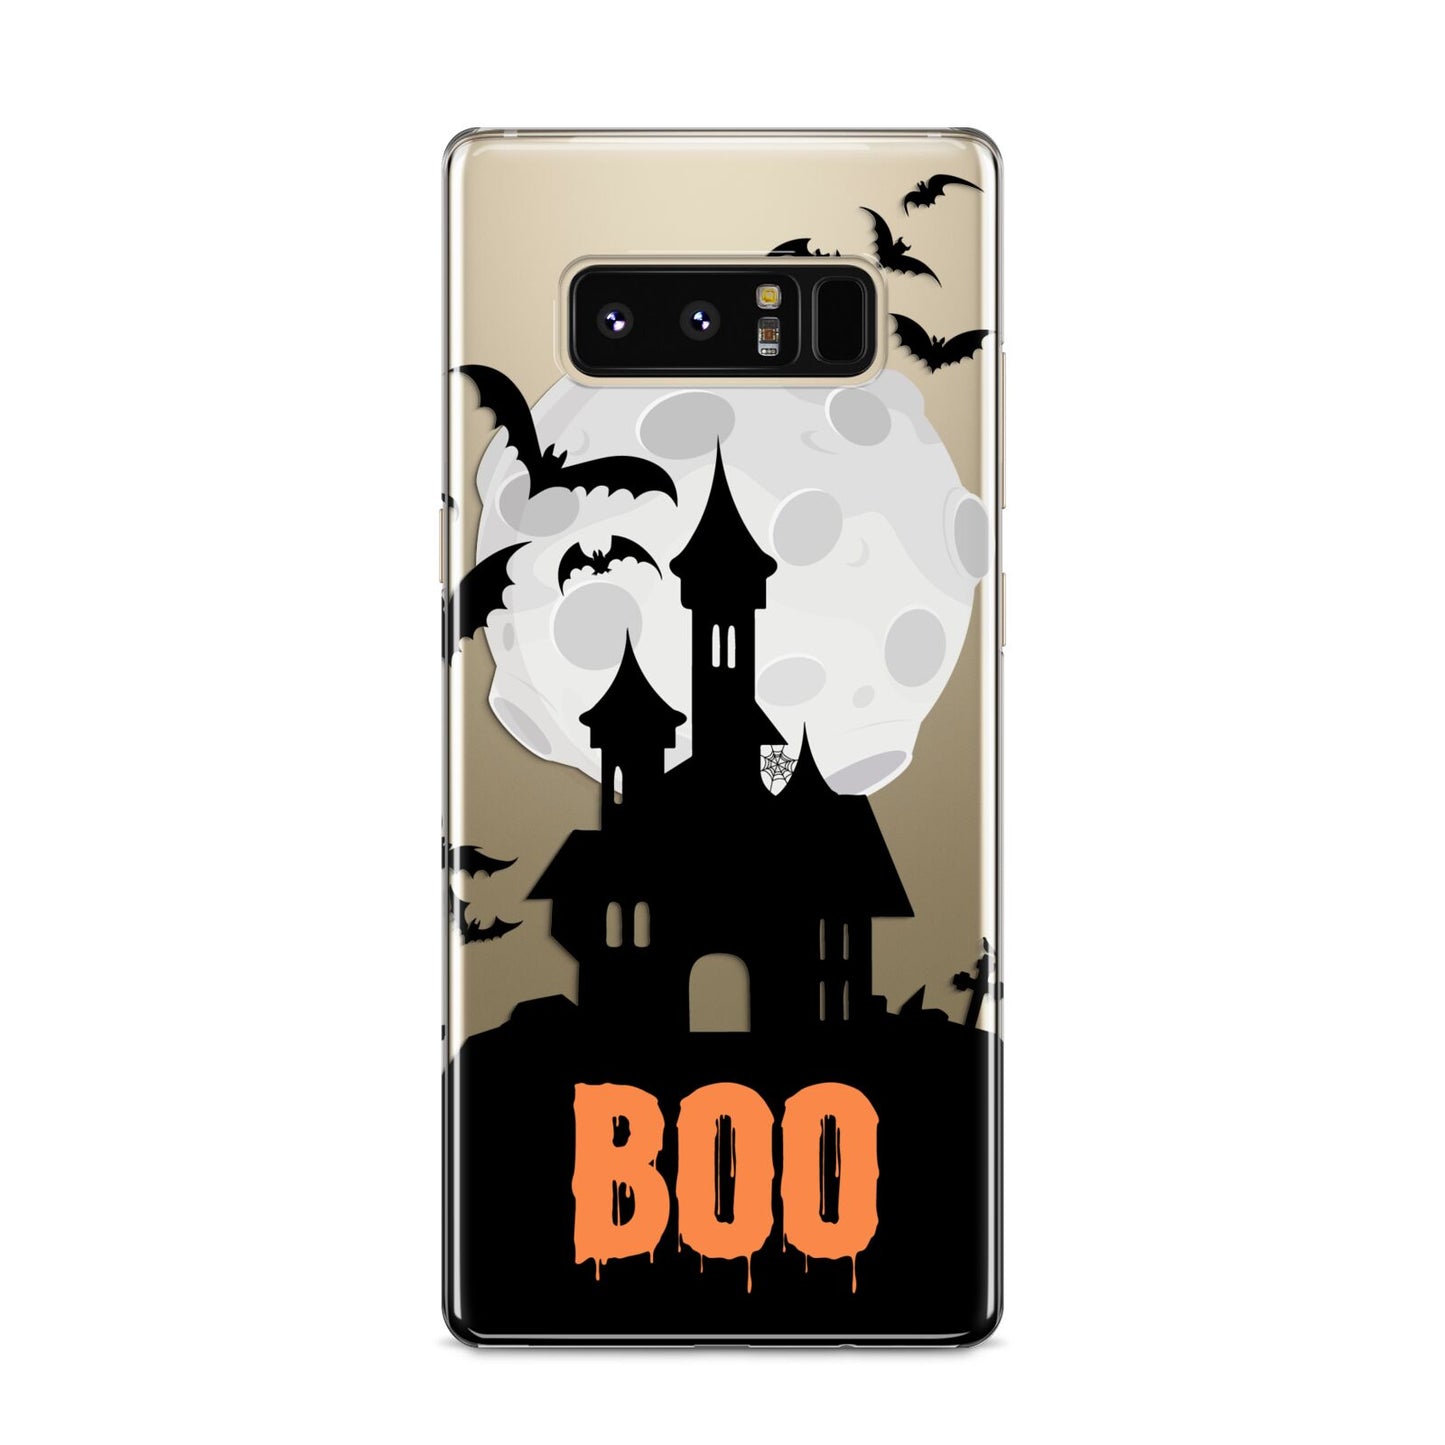 Boo Gothic Black Halloween Samsung Galaxy S8 Case